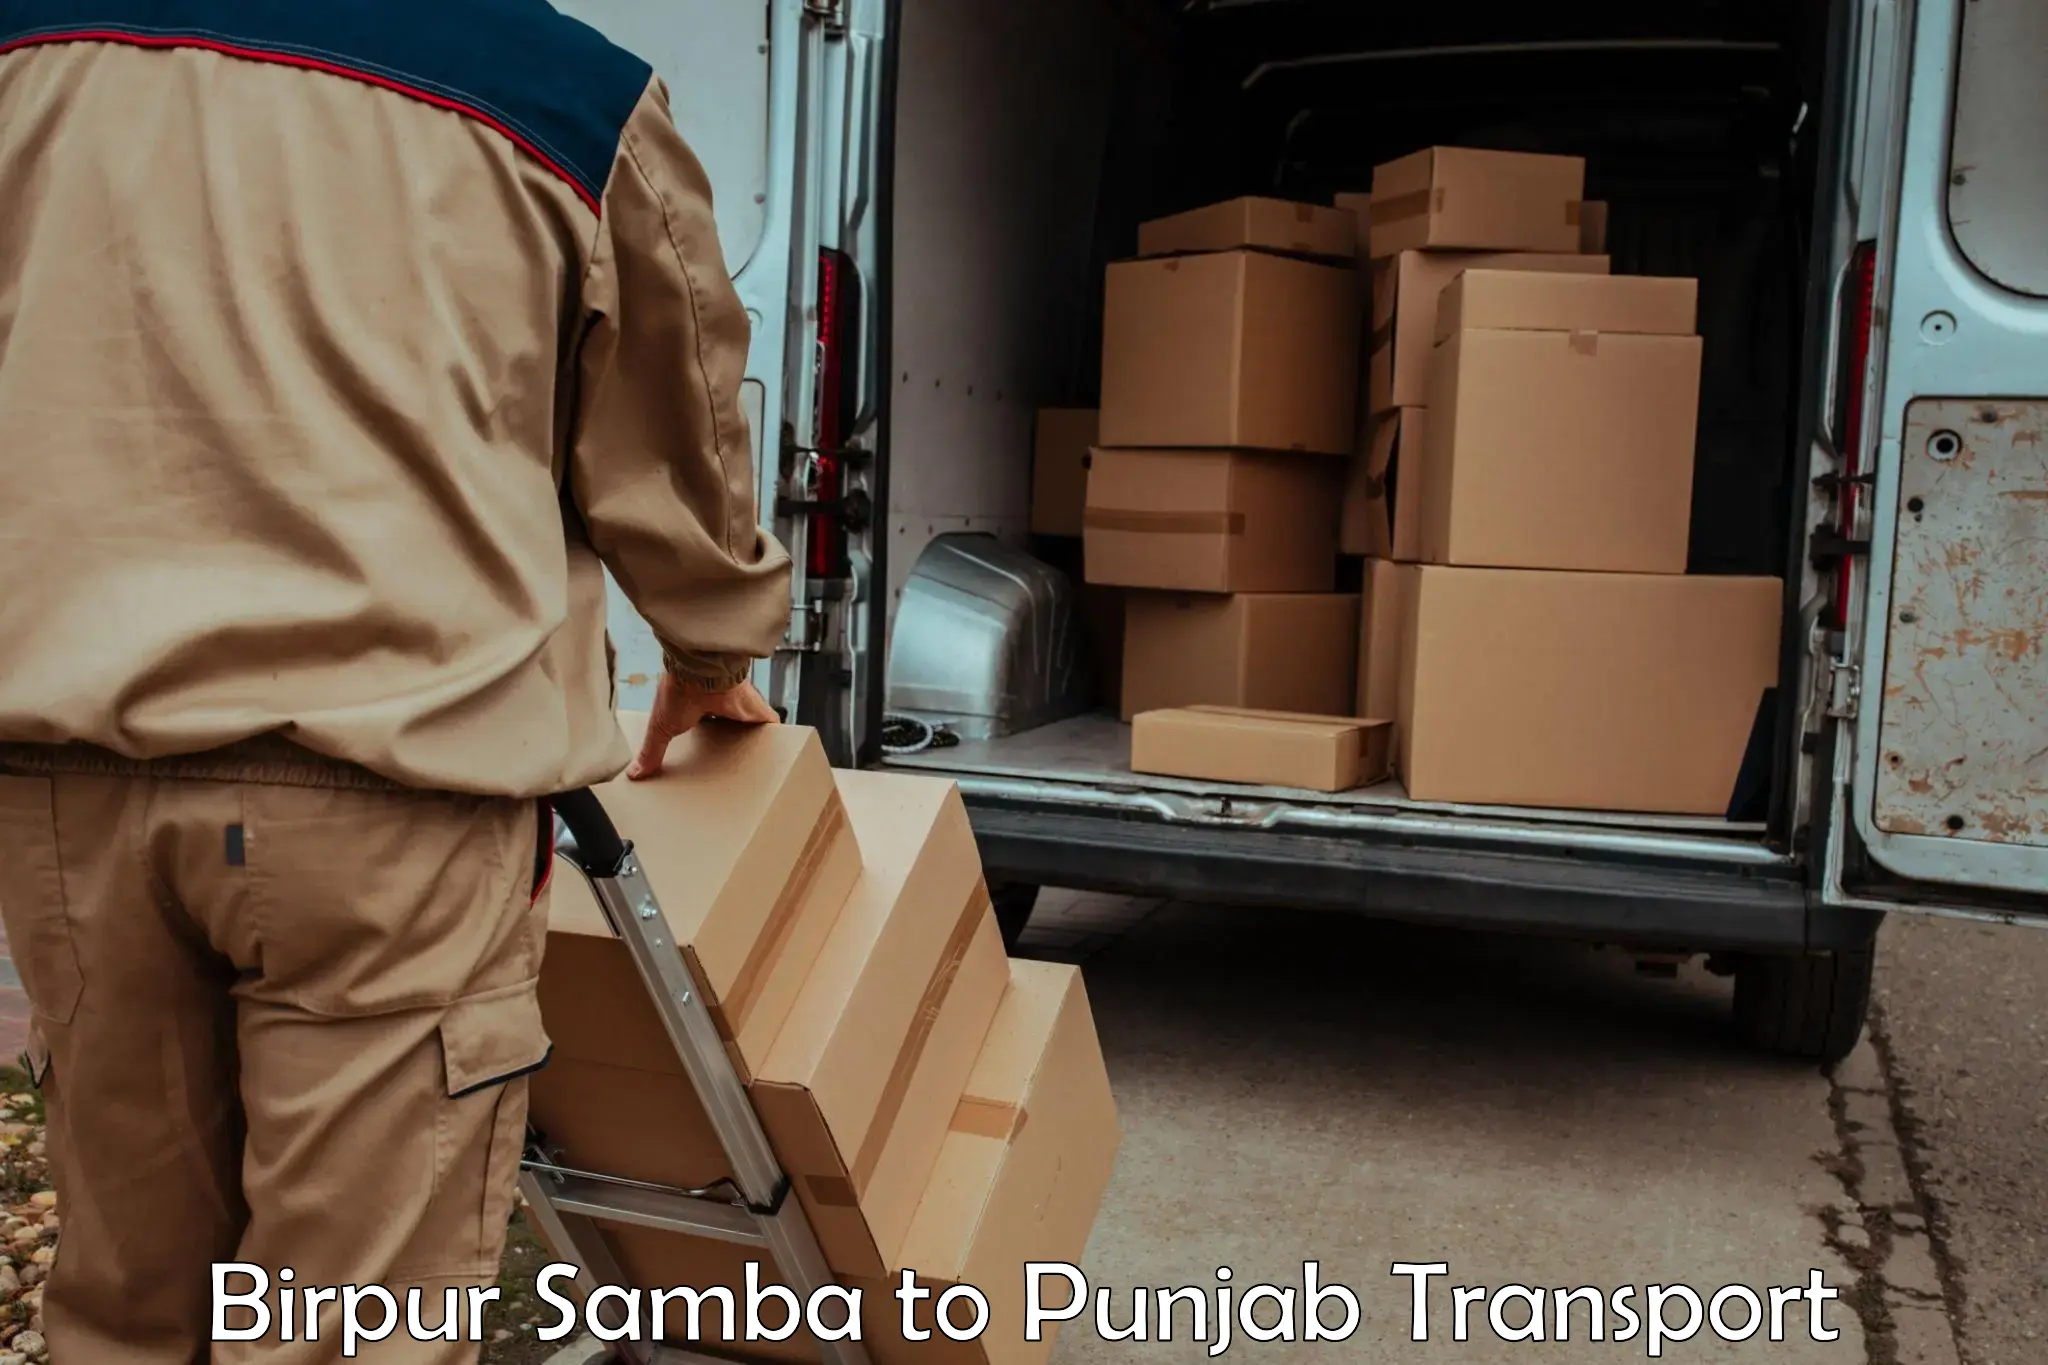 Truck transport companies in India Birpur Samba to Amritsar